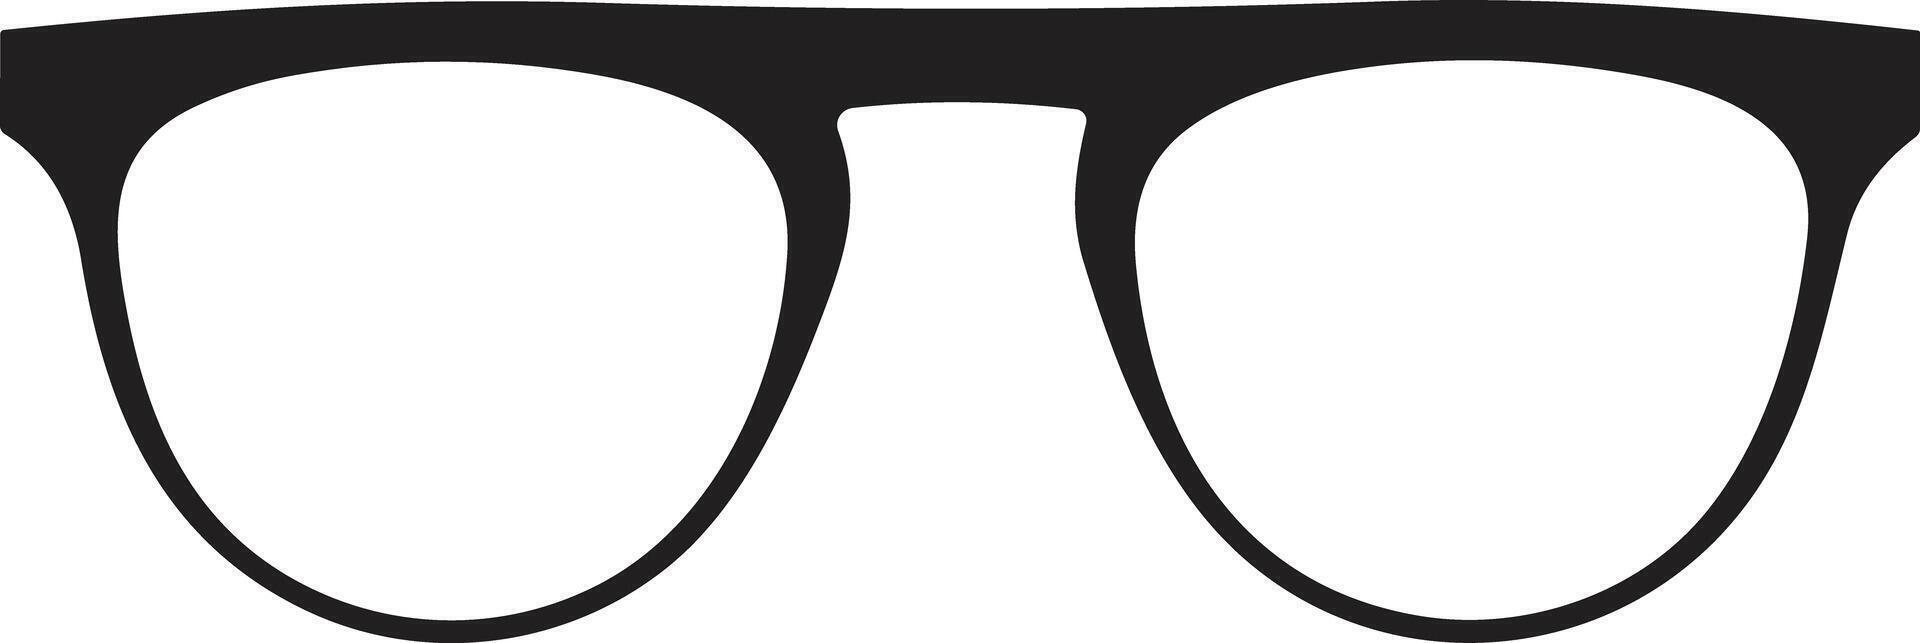 occhiali logo o distintivo nel Vintage ▾ o retrò stile vettore